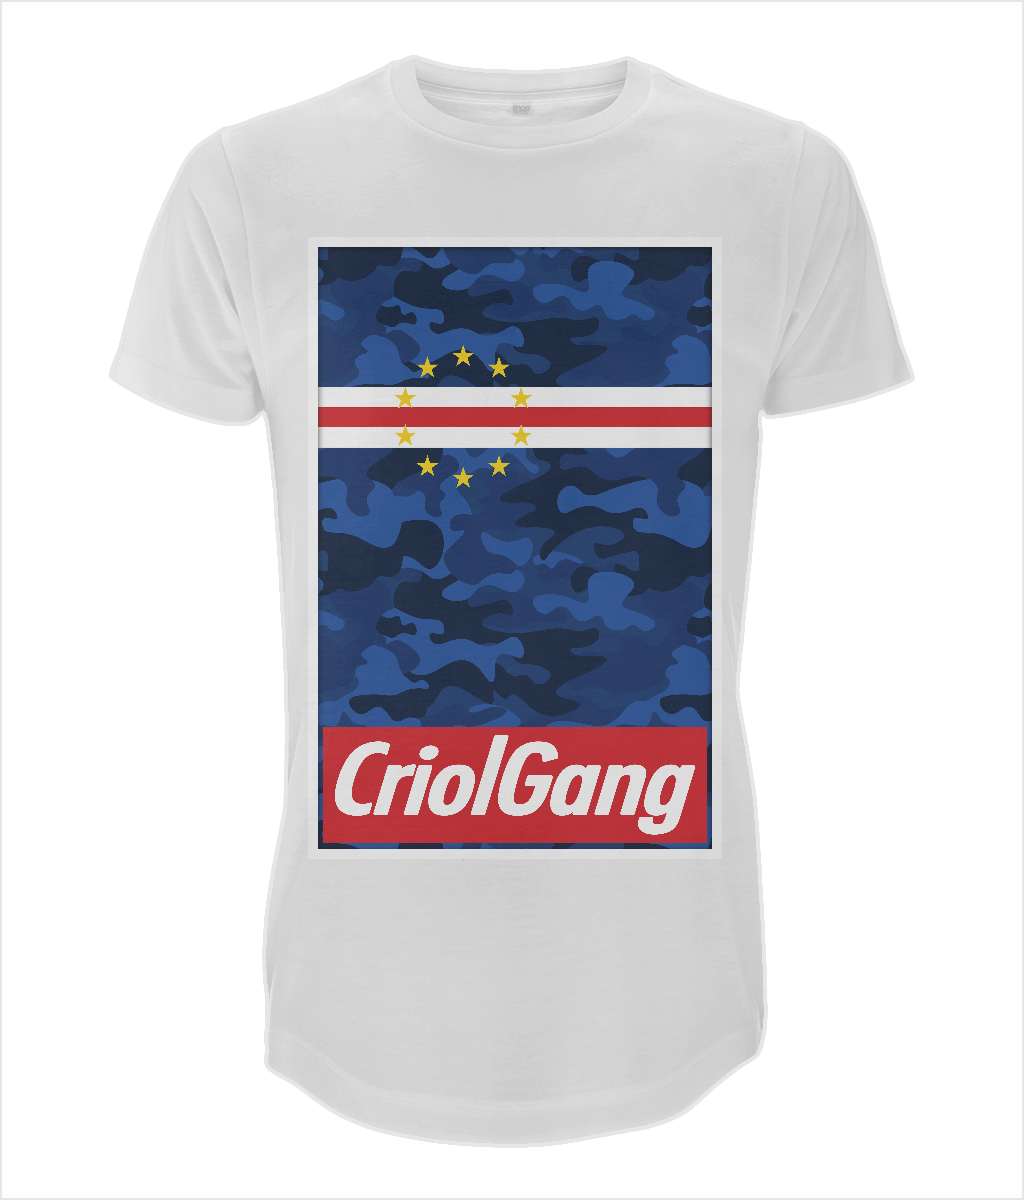 Cabo Verde Long Men's T-Shirt "CriolGang" - CVC Streetwear